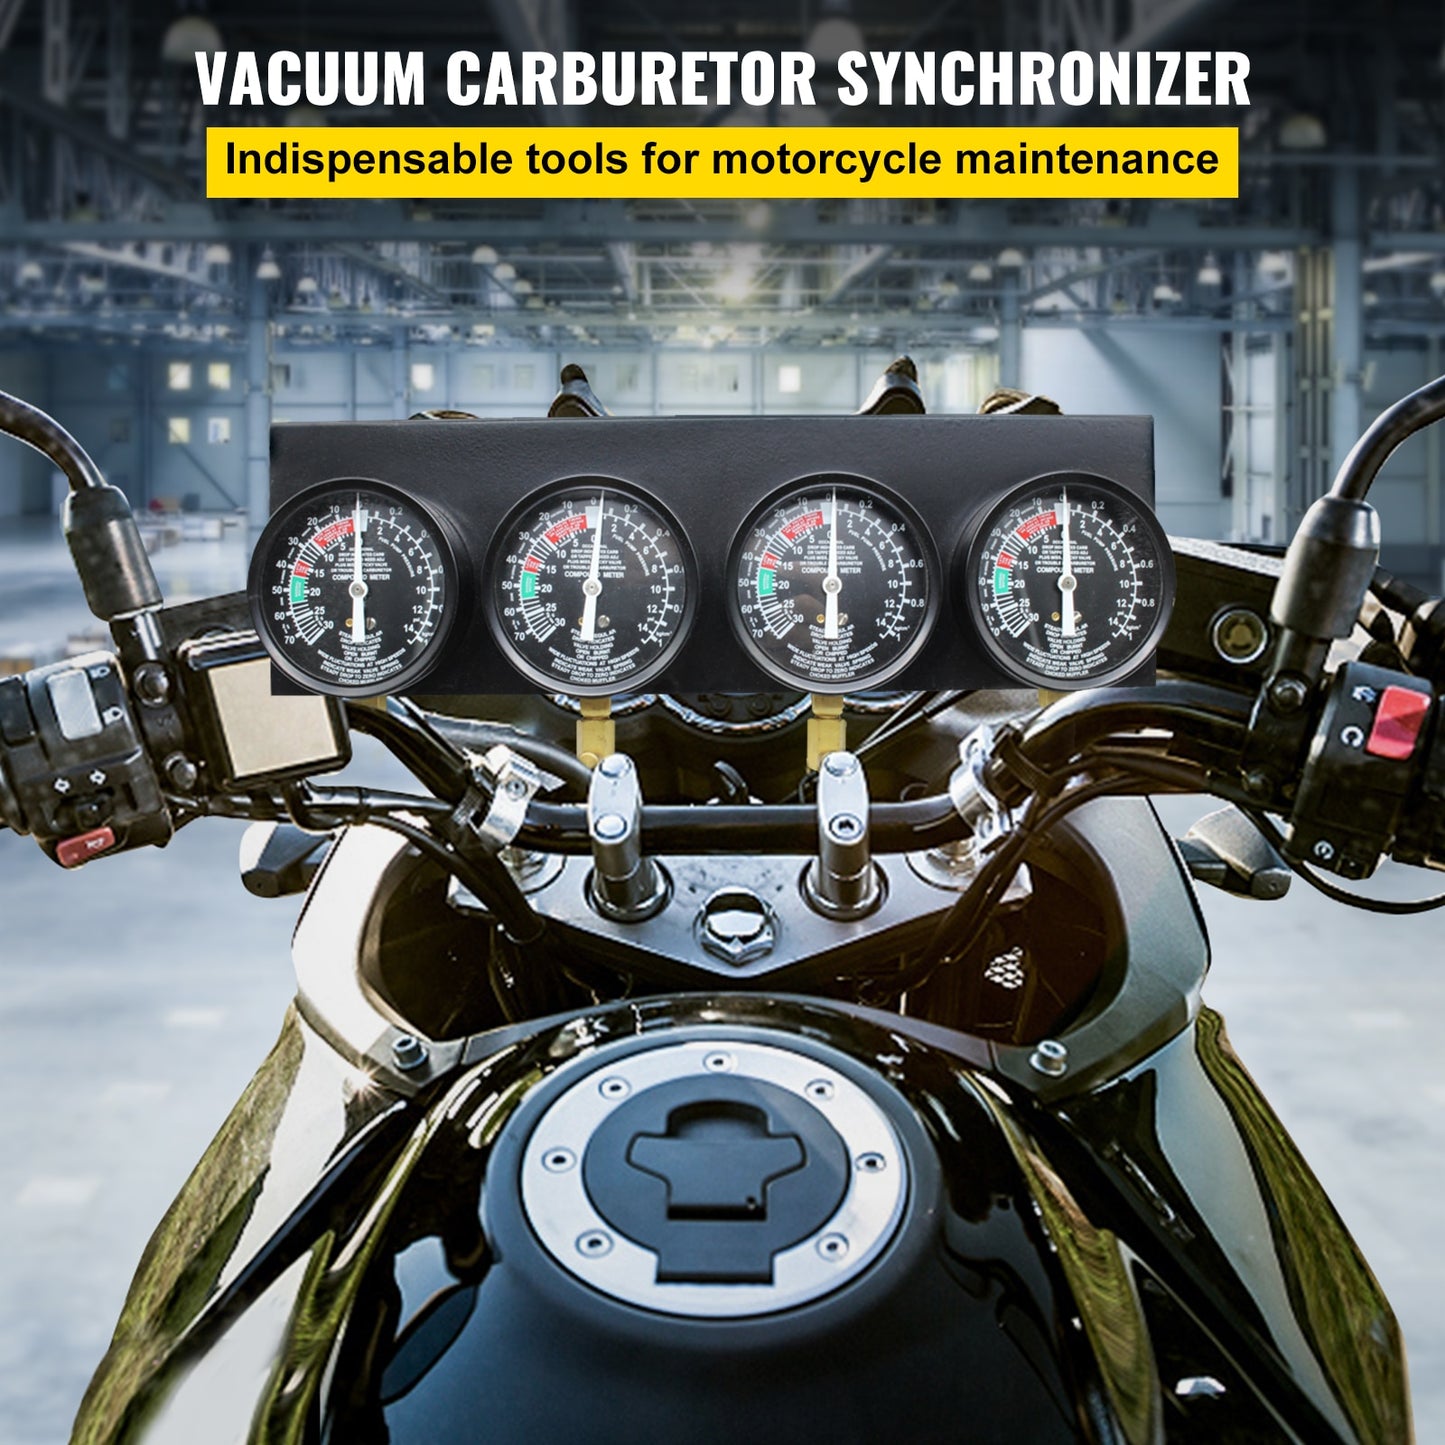 Fuel Vacuum Carburetor Synchronize Tool Kit - Achieve Perfect Carburetor Synchronization with Carb Sync Gauge Set and Rubber Hose